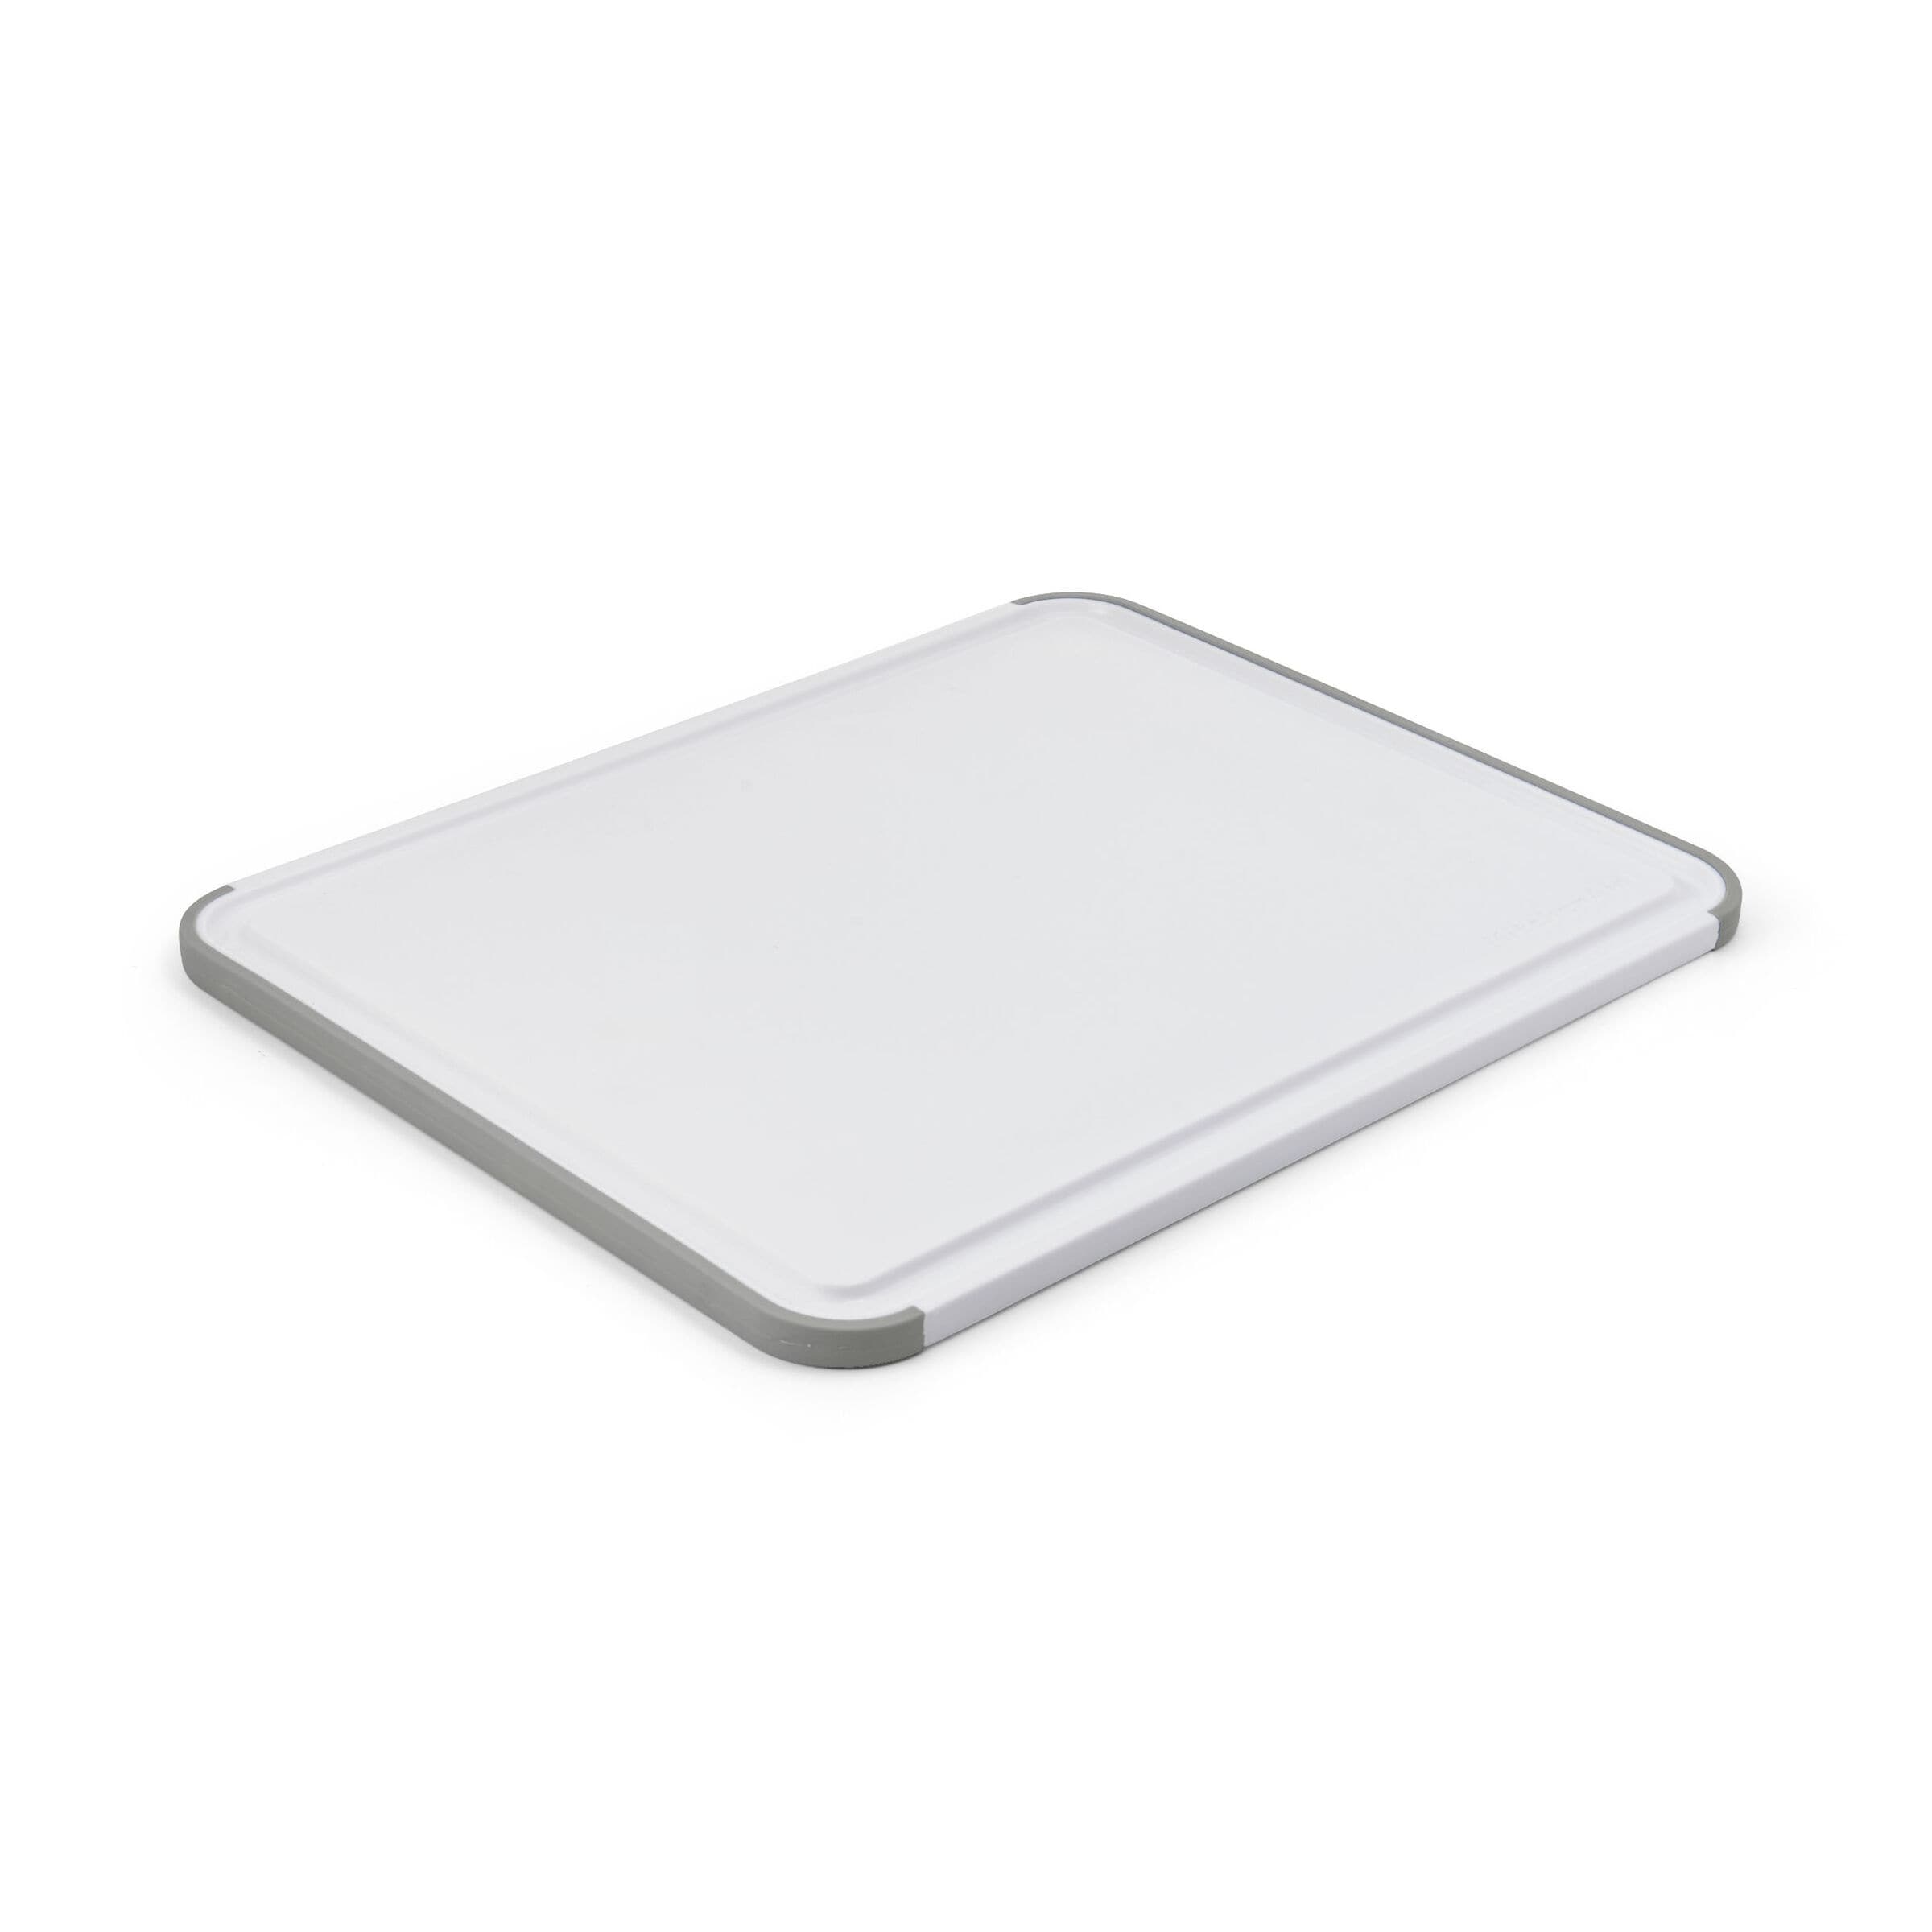 s OXO cutting board is dishwasher safe & cheap